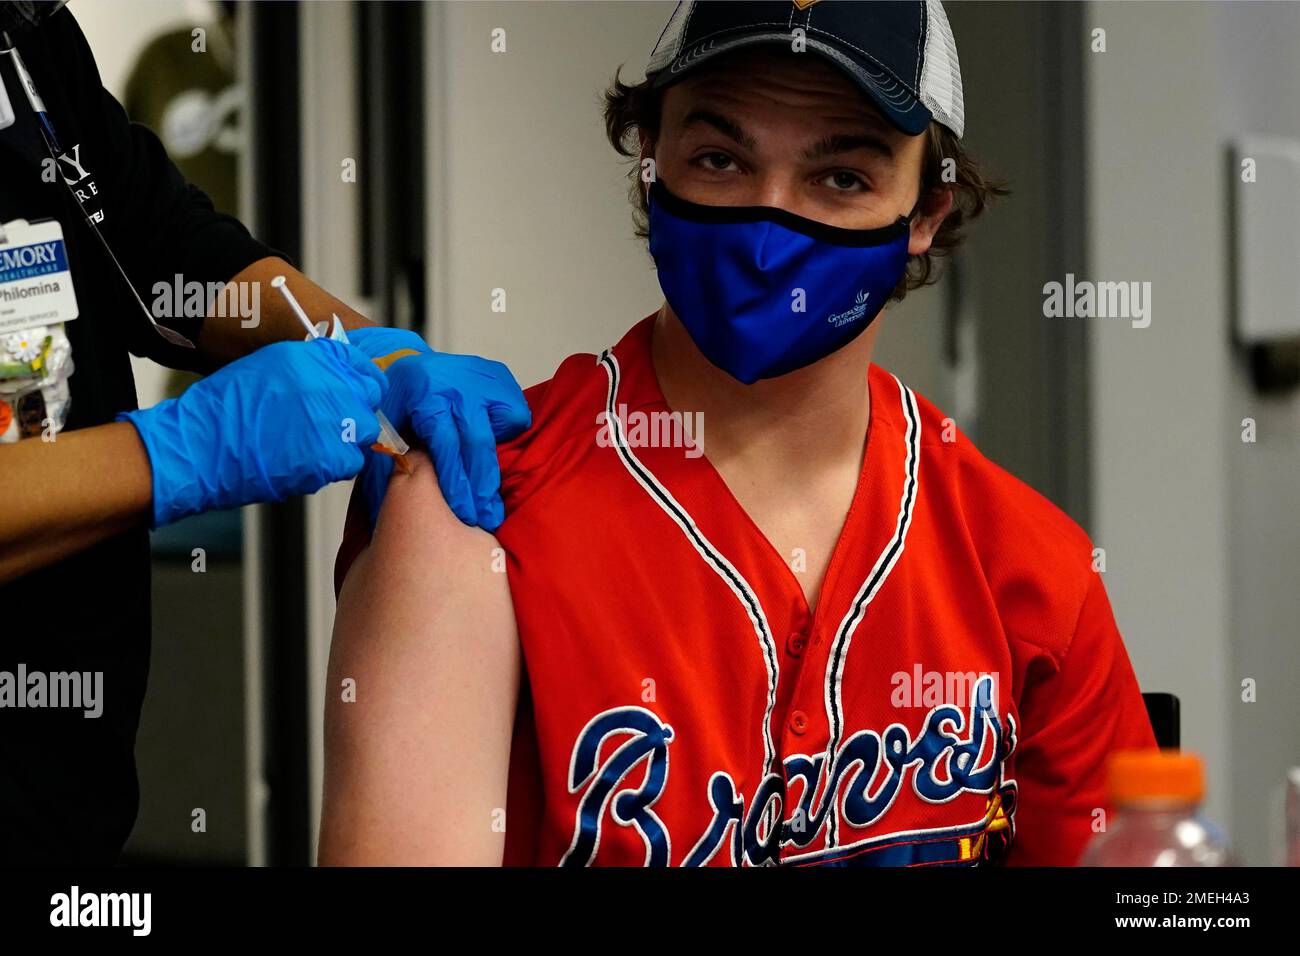 Williams Hughes, of Savannah, Ga., gets a COVID-19 vaccine before a baseball game between the Atlanta Braves and the Philadelphia Phillies, Friday, May 7, 2021, in Atlanta